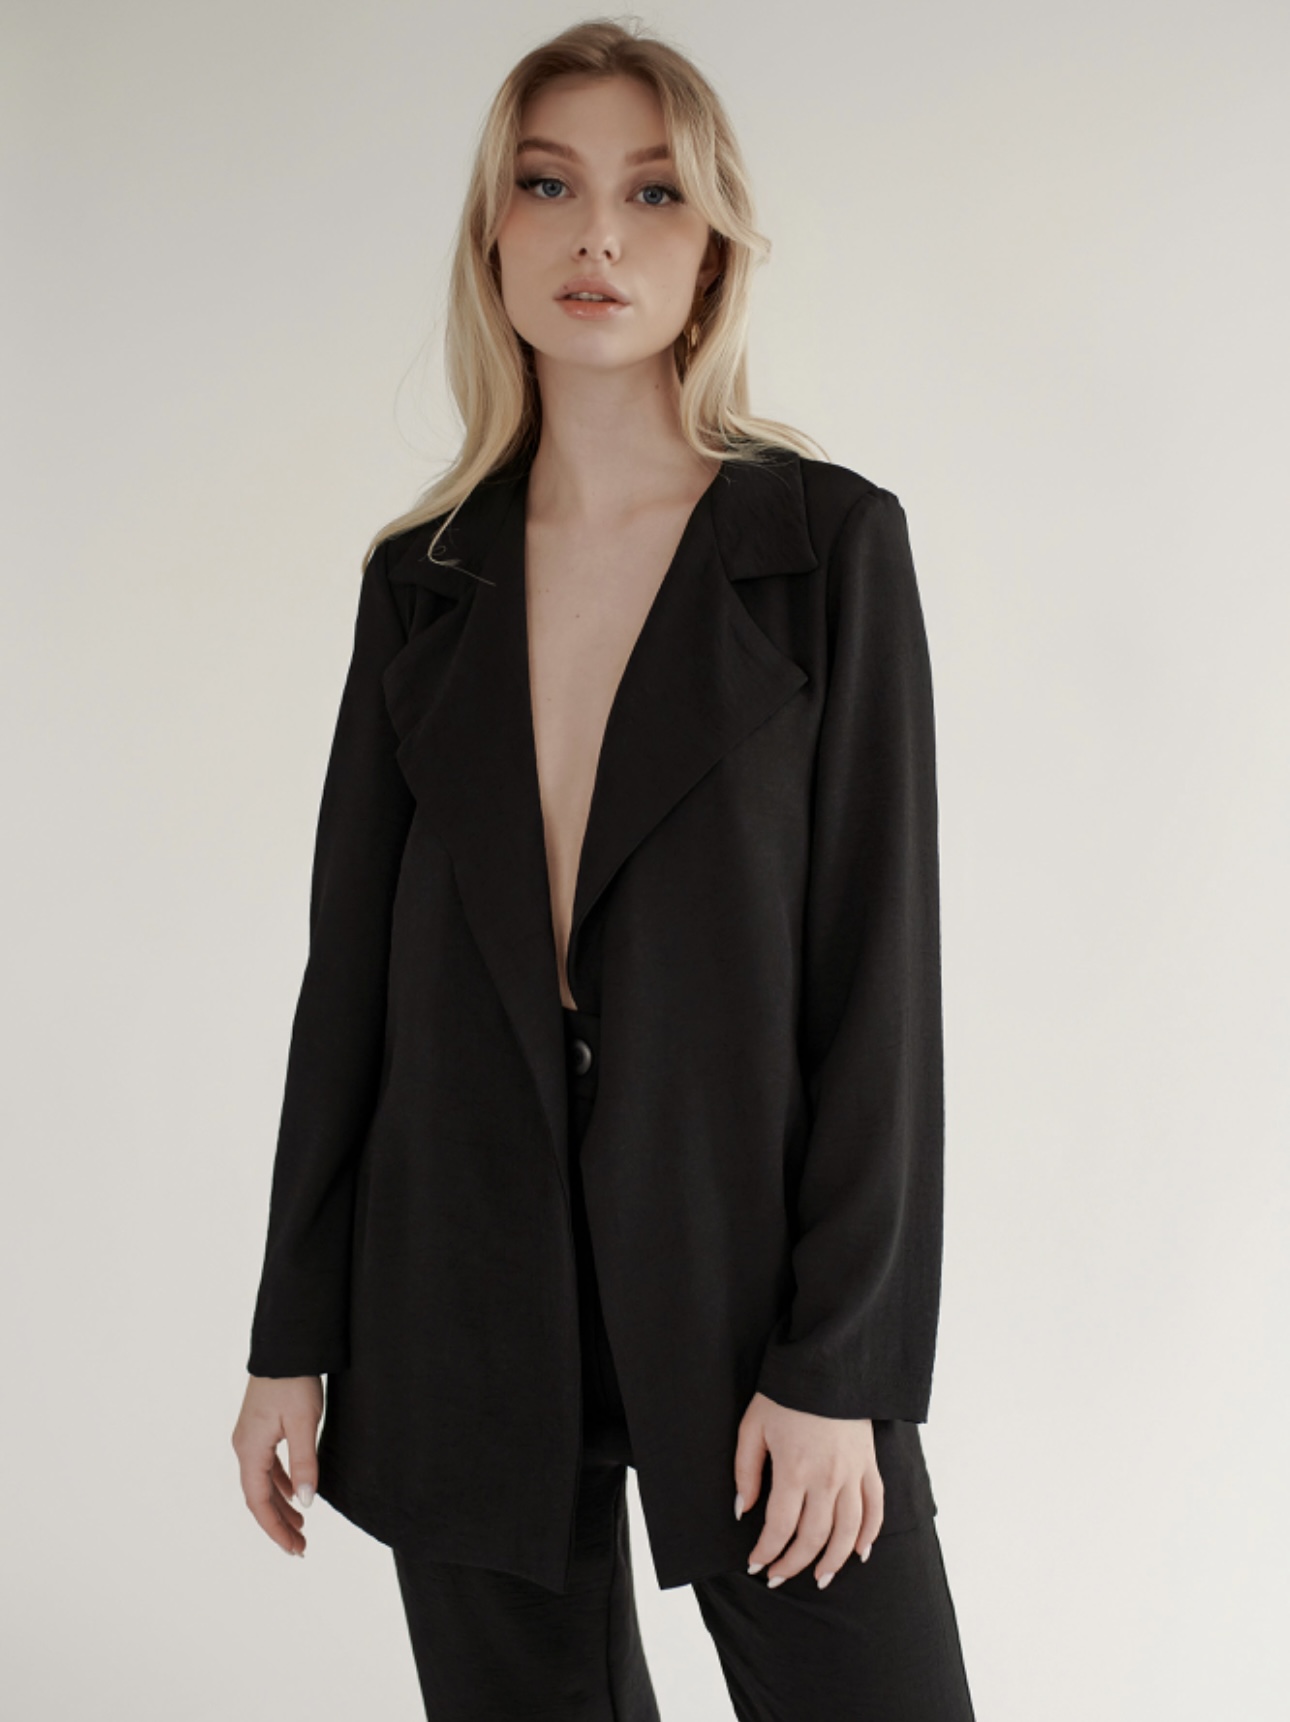 Model wearing a black blazer from RW&CO